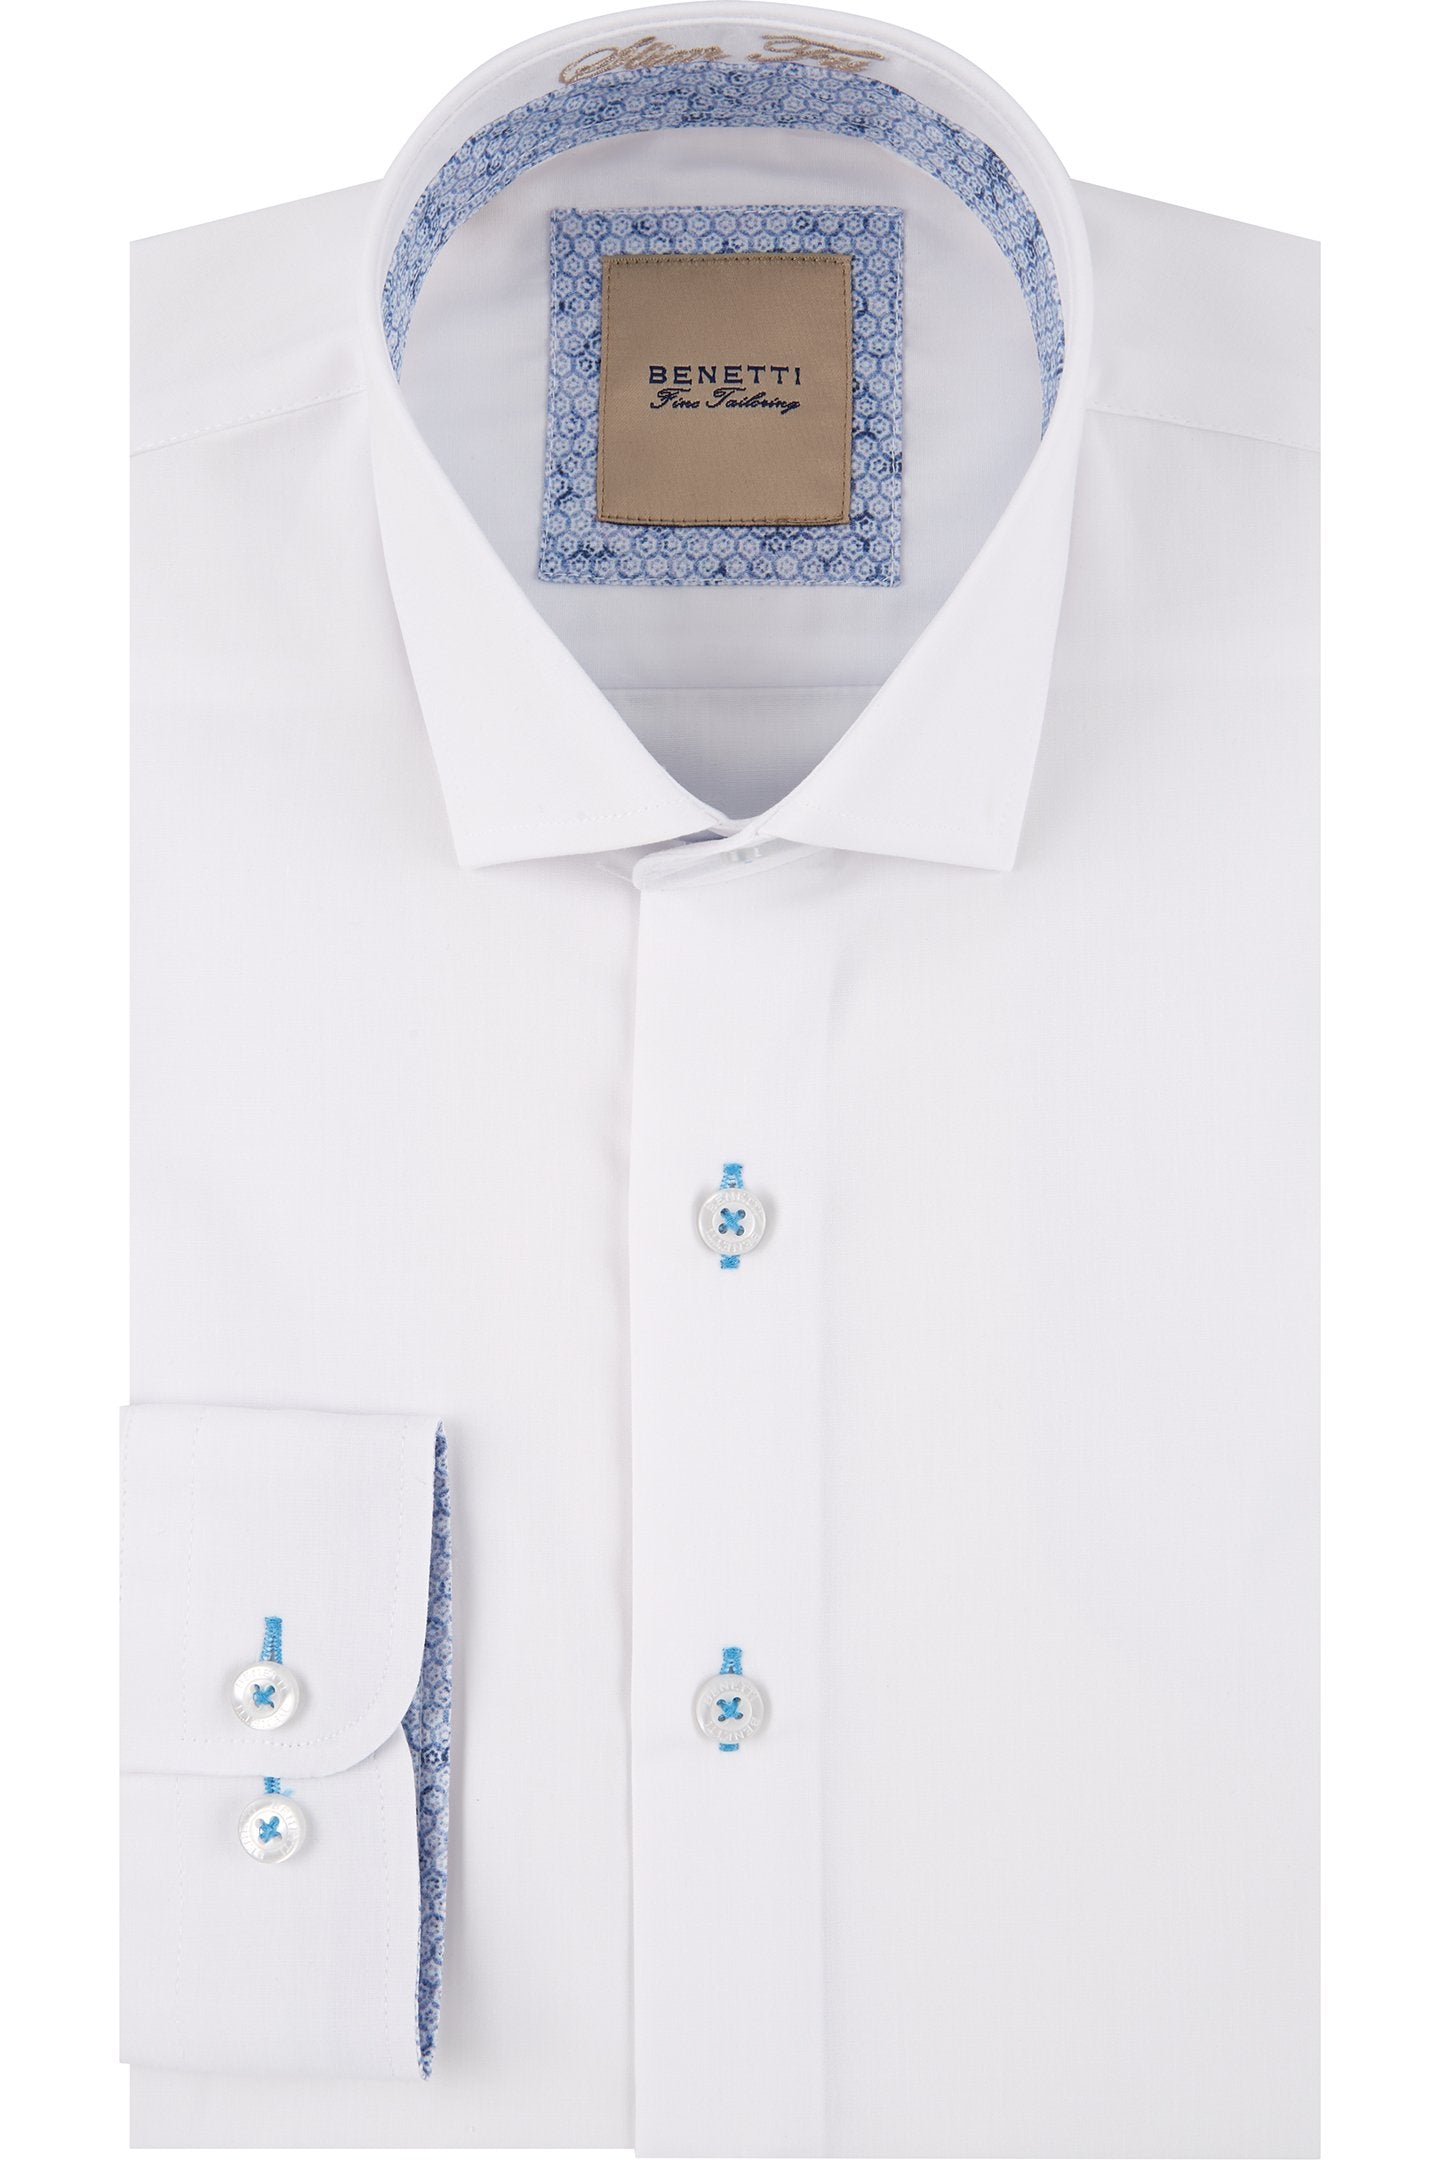 Obj White Slim Fit Shirt By Benetti - Spirit Clothing